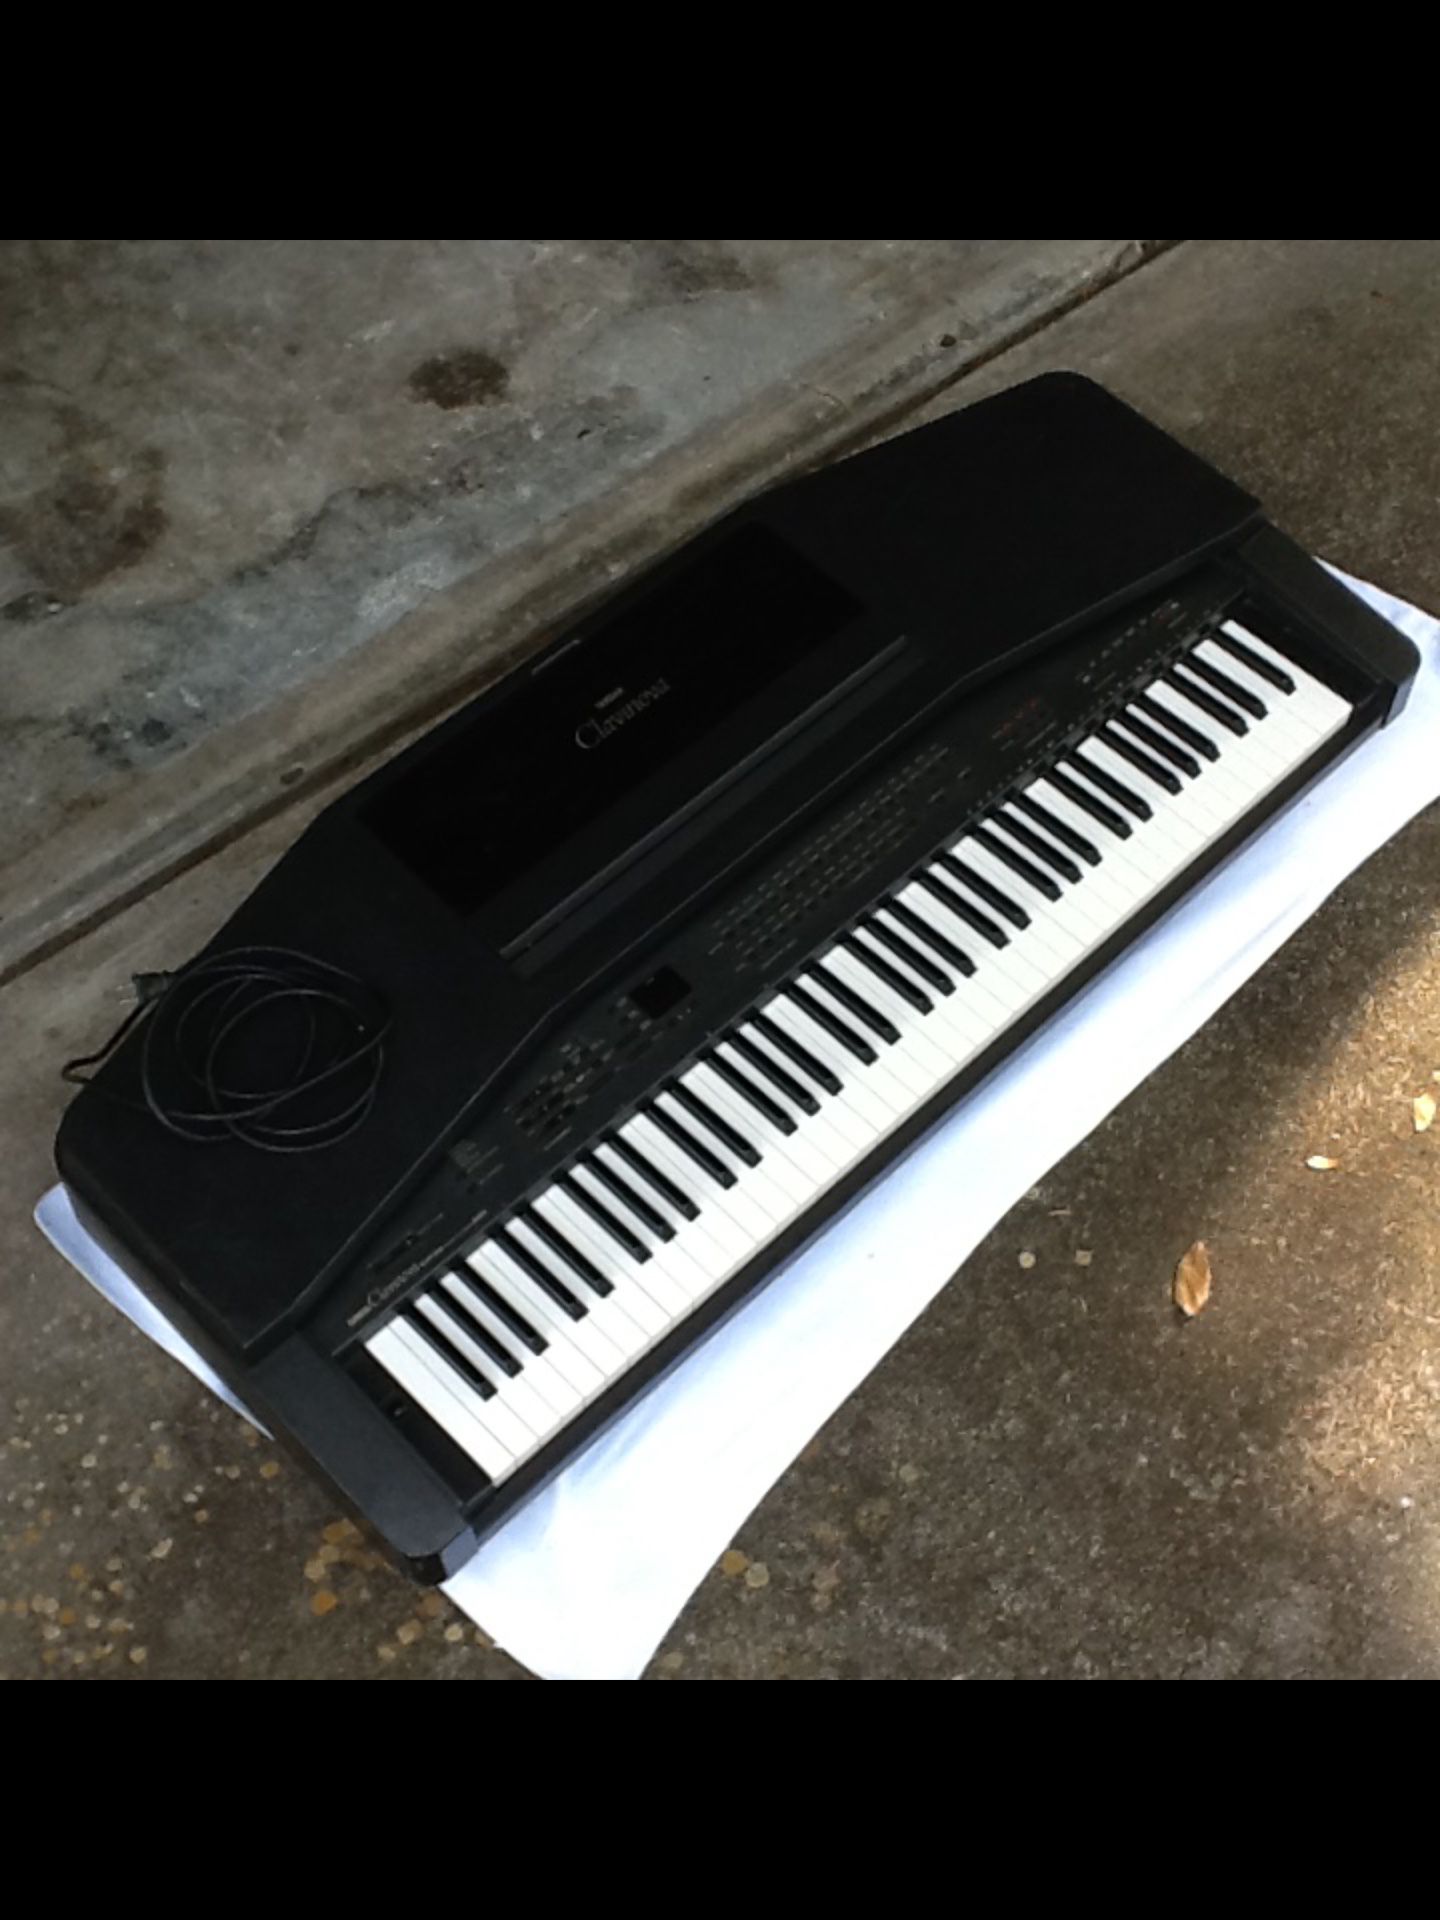  Yamaha Clavinova Digital Piano Keyboard 